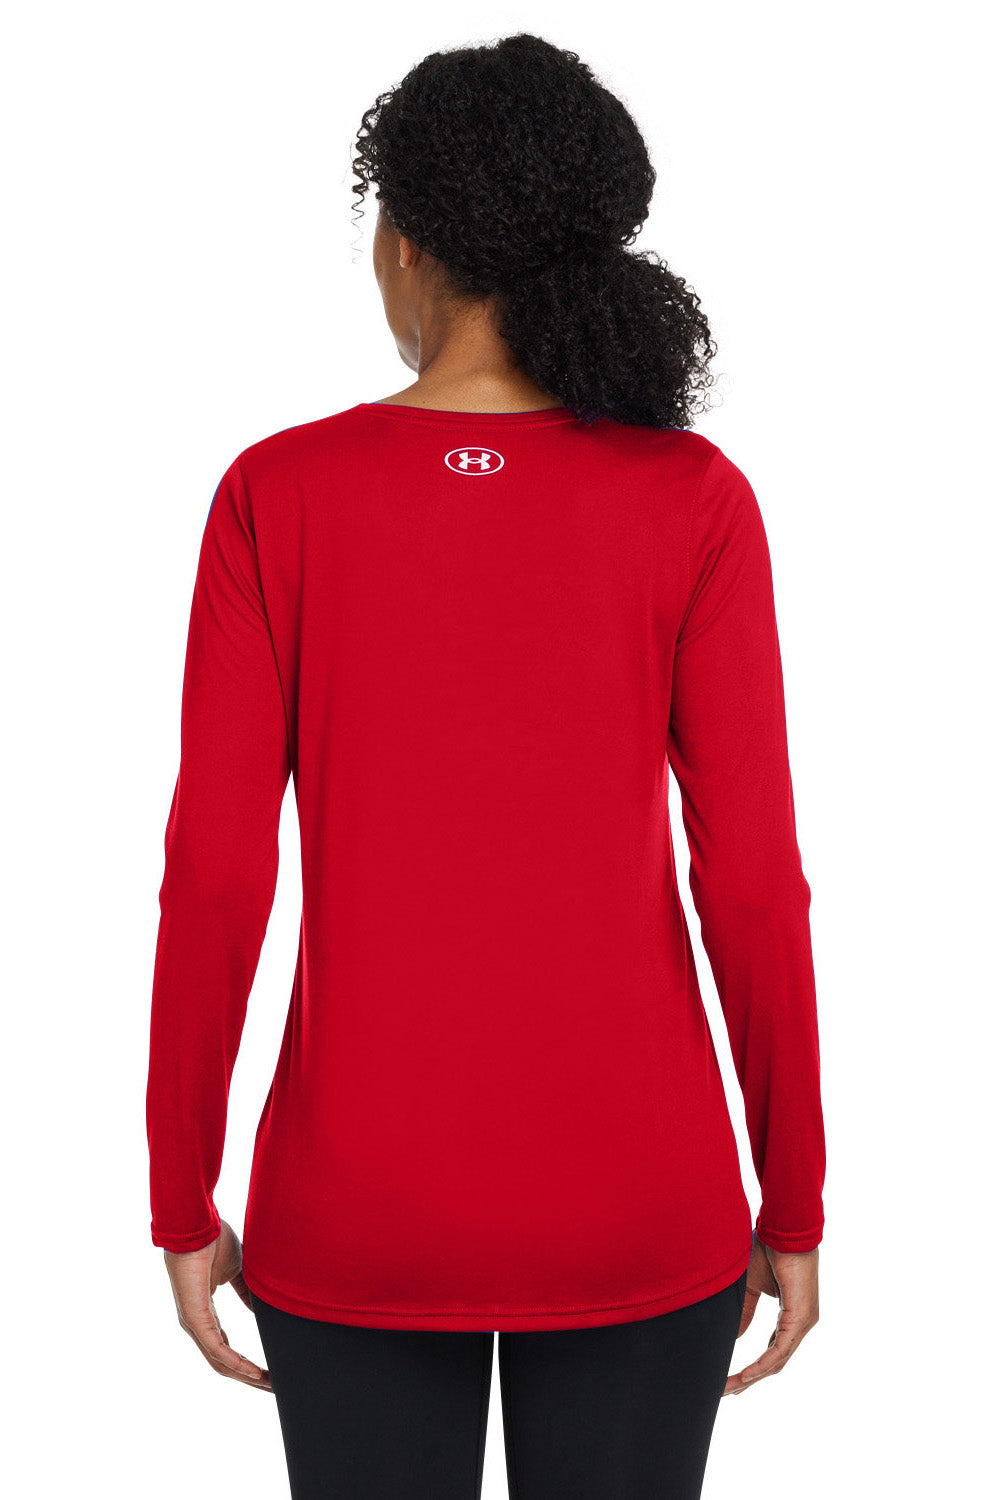 Under Armour 1376852 Womens Team Tech Moisture Wicking Long Sleeve Crewneck T-Shirt Red Model Back